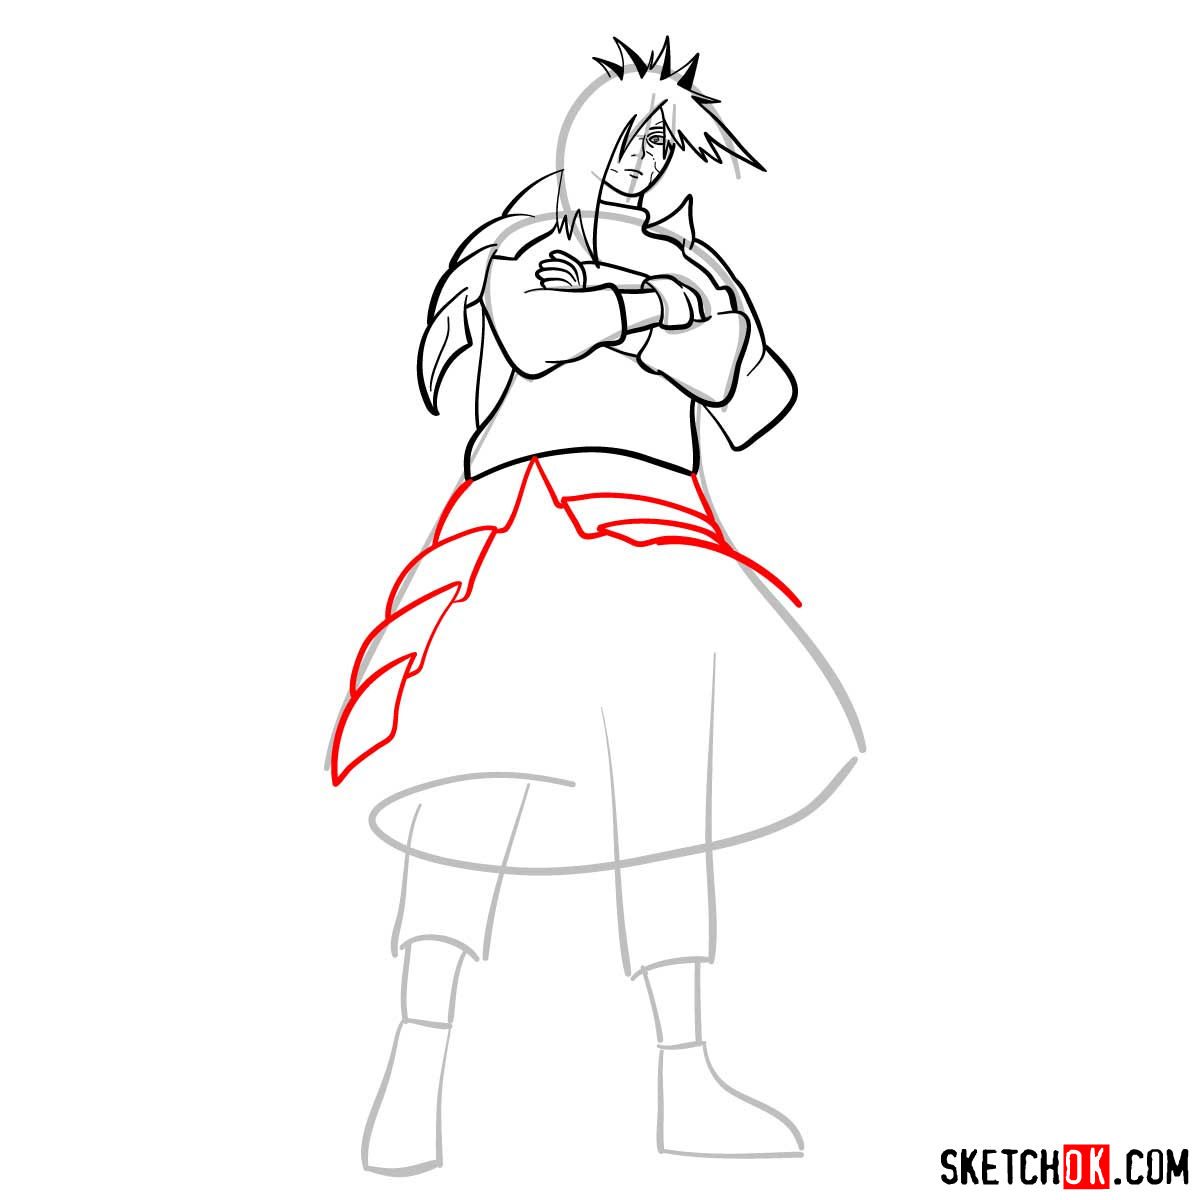 How to draw Madara Uchiha from Naruto anime - step 10